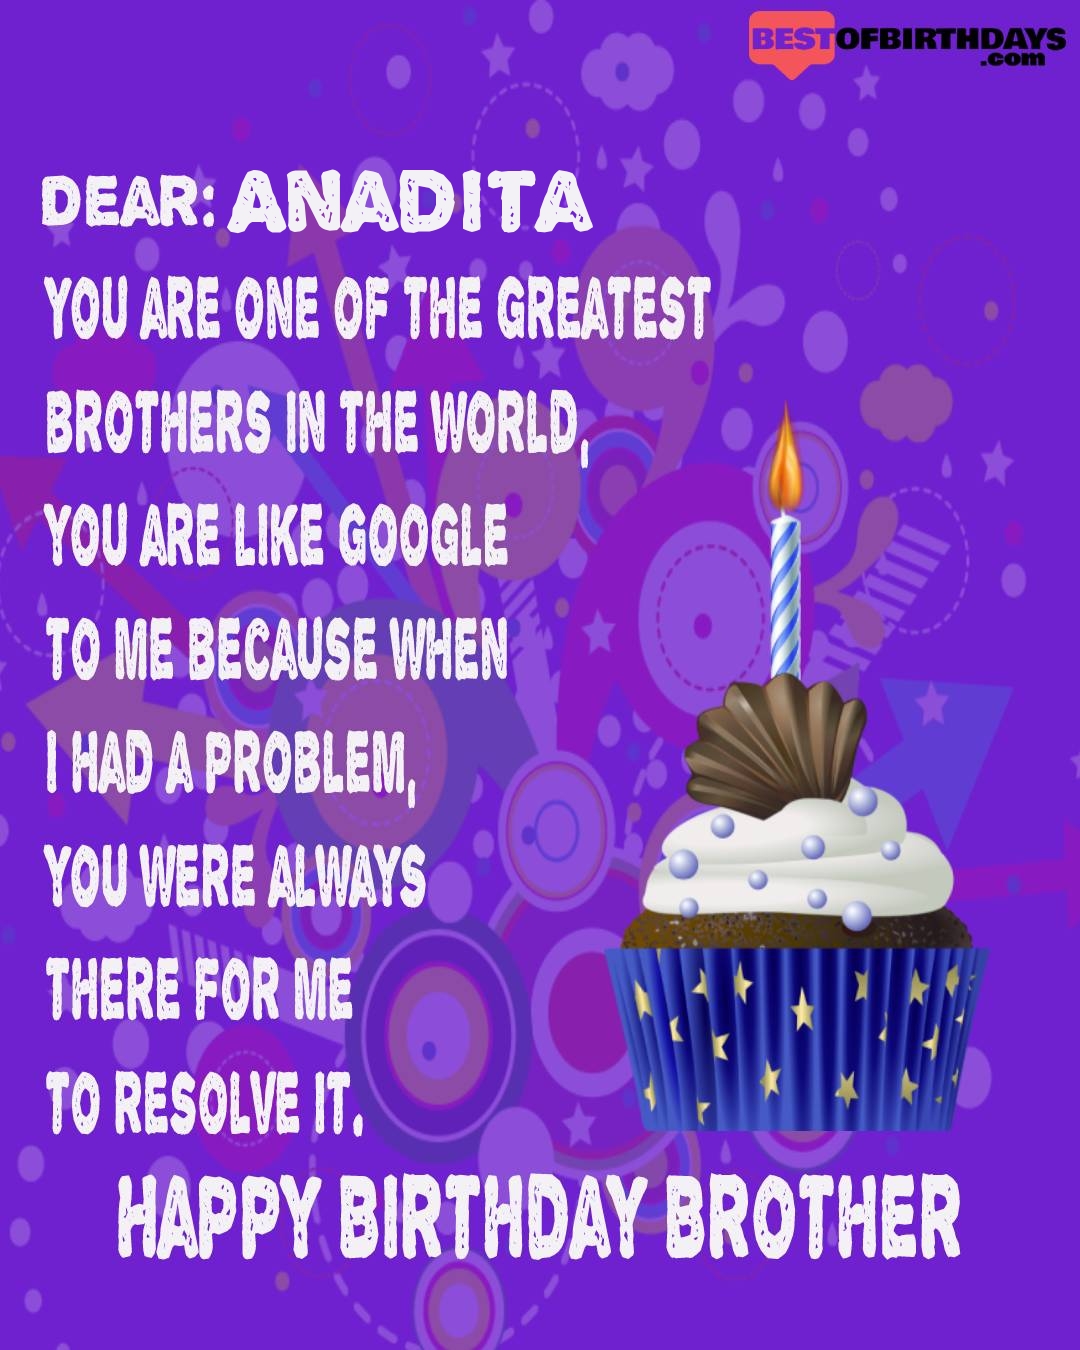 Happy birthday anadita bhai brother bro